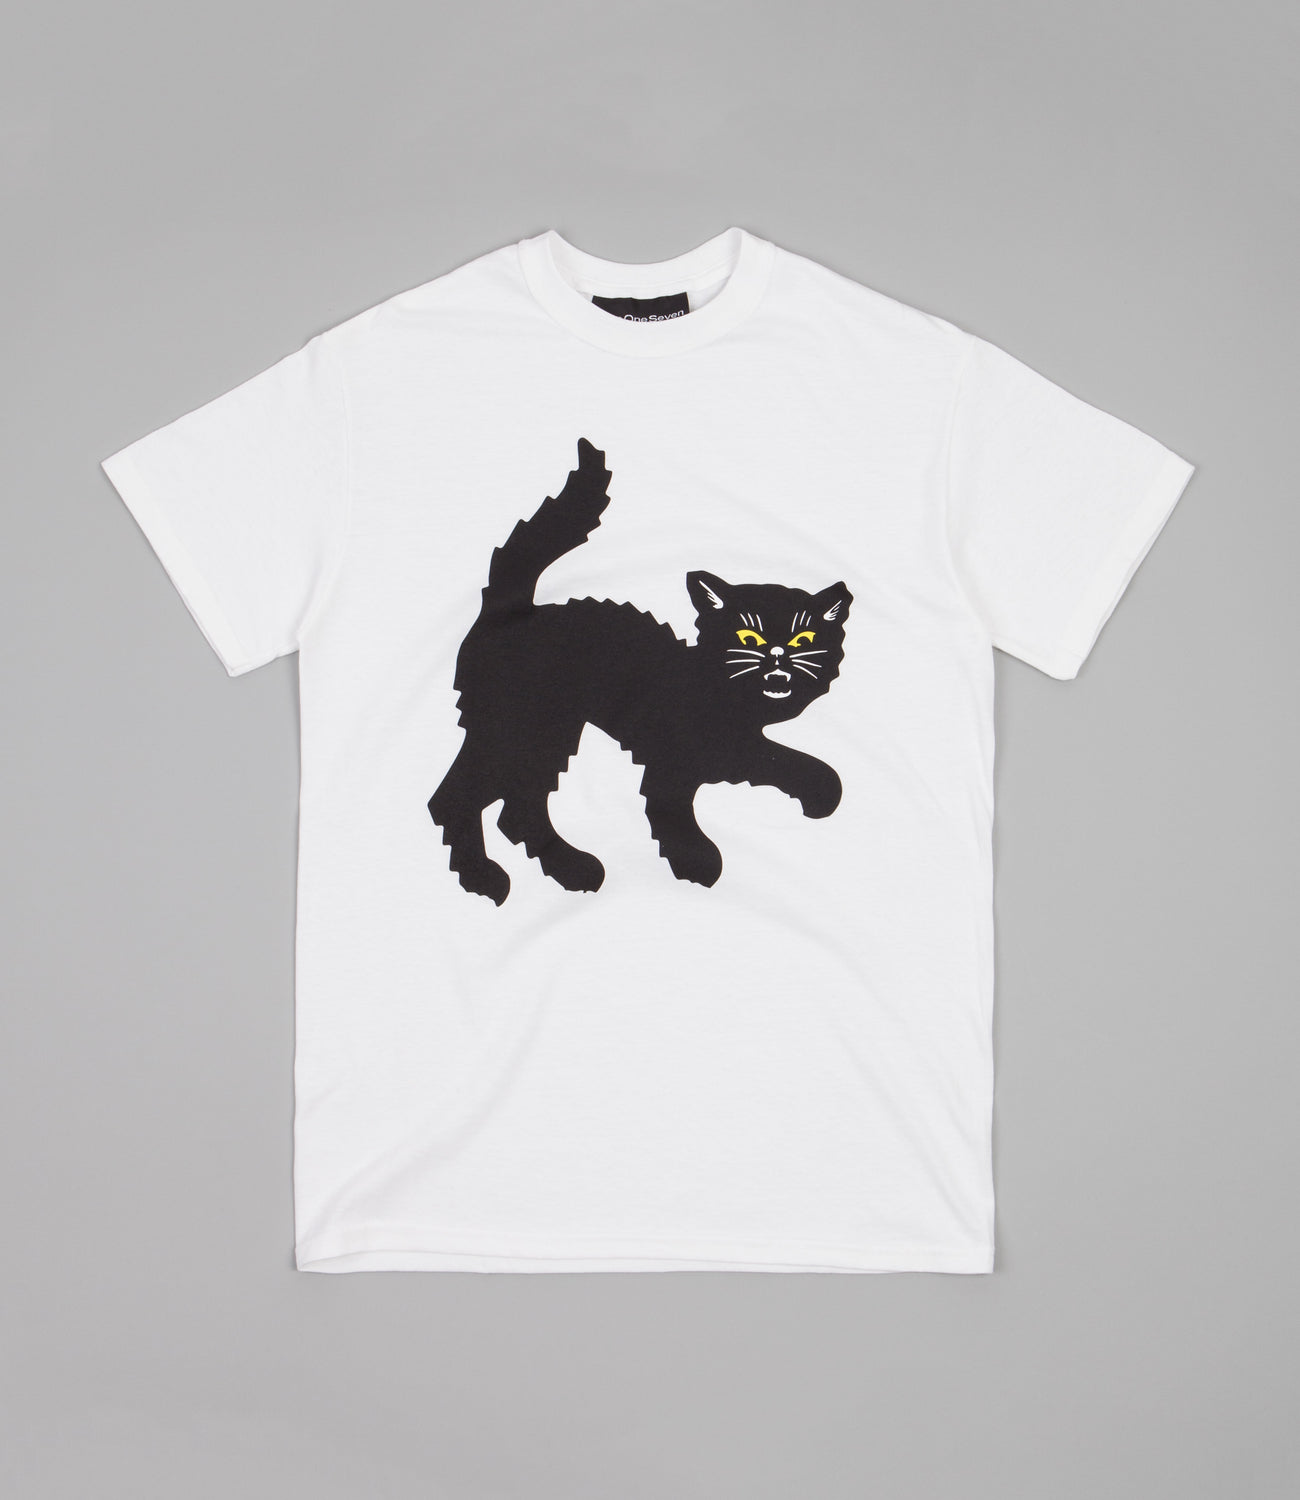 Call Me 917 Black Cat T-Shirt - White | Flatspot